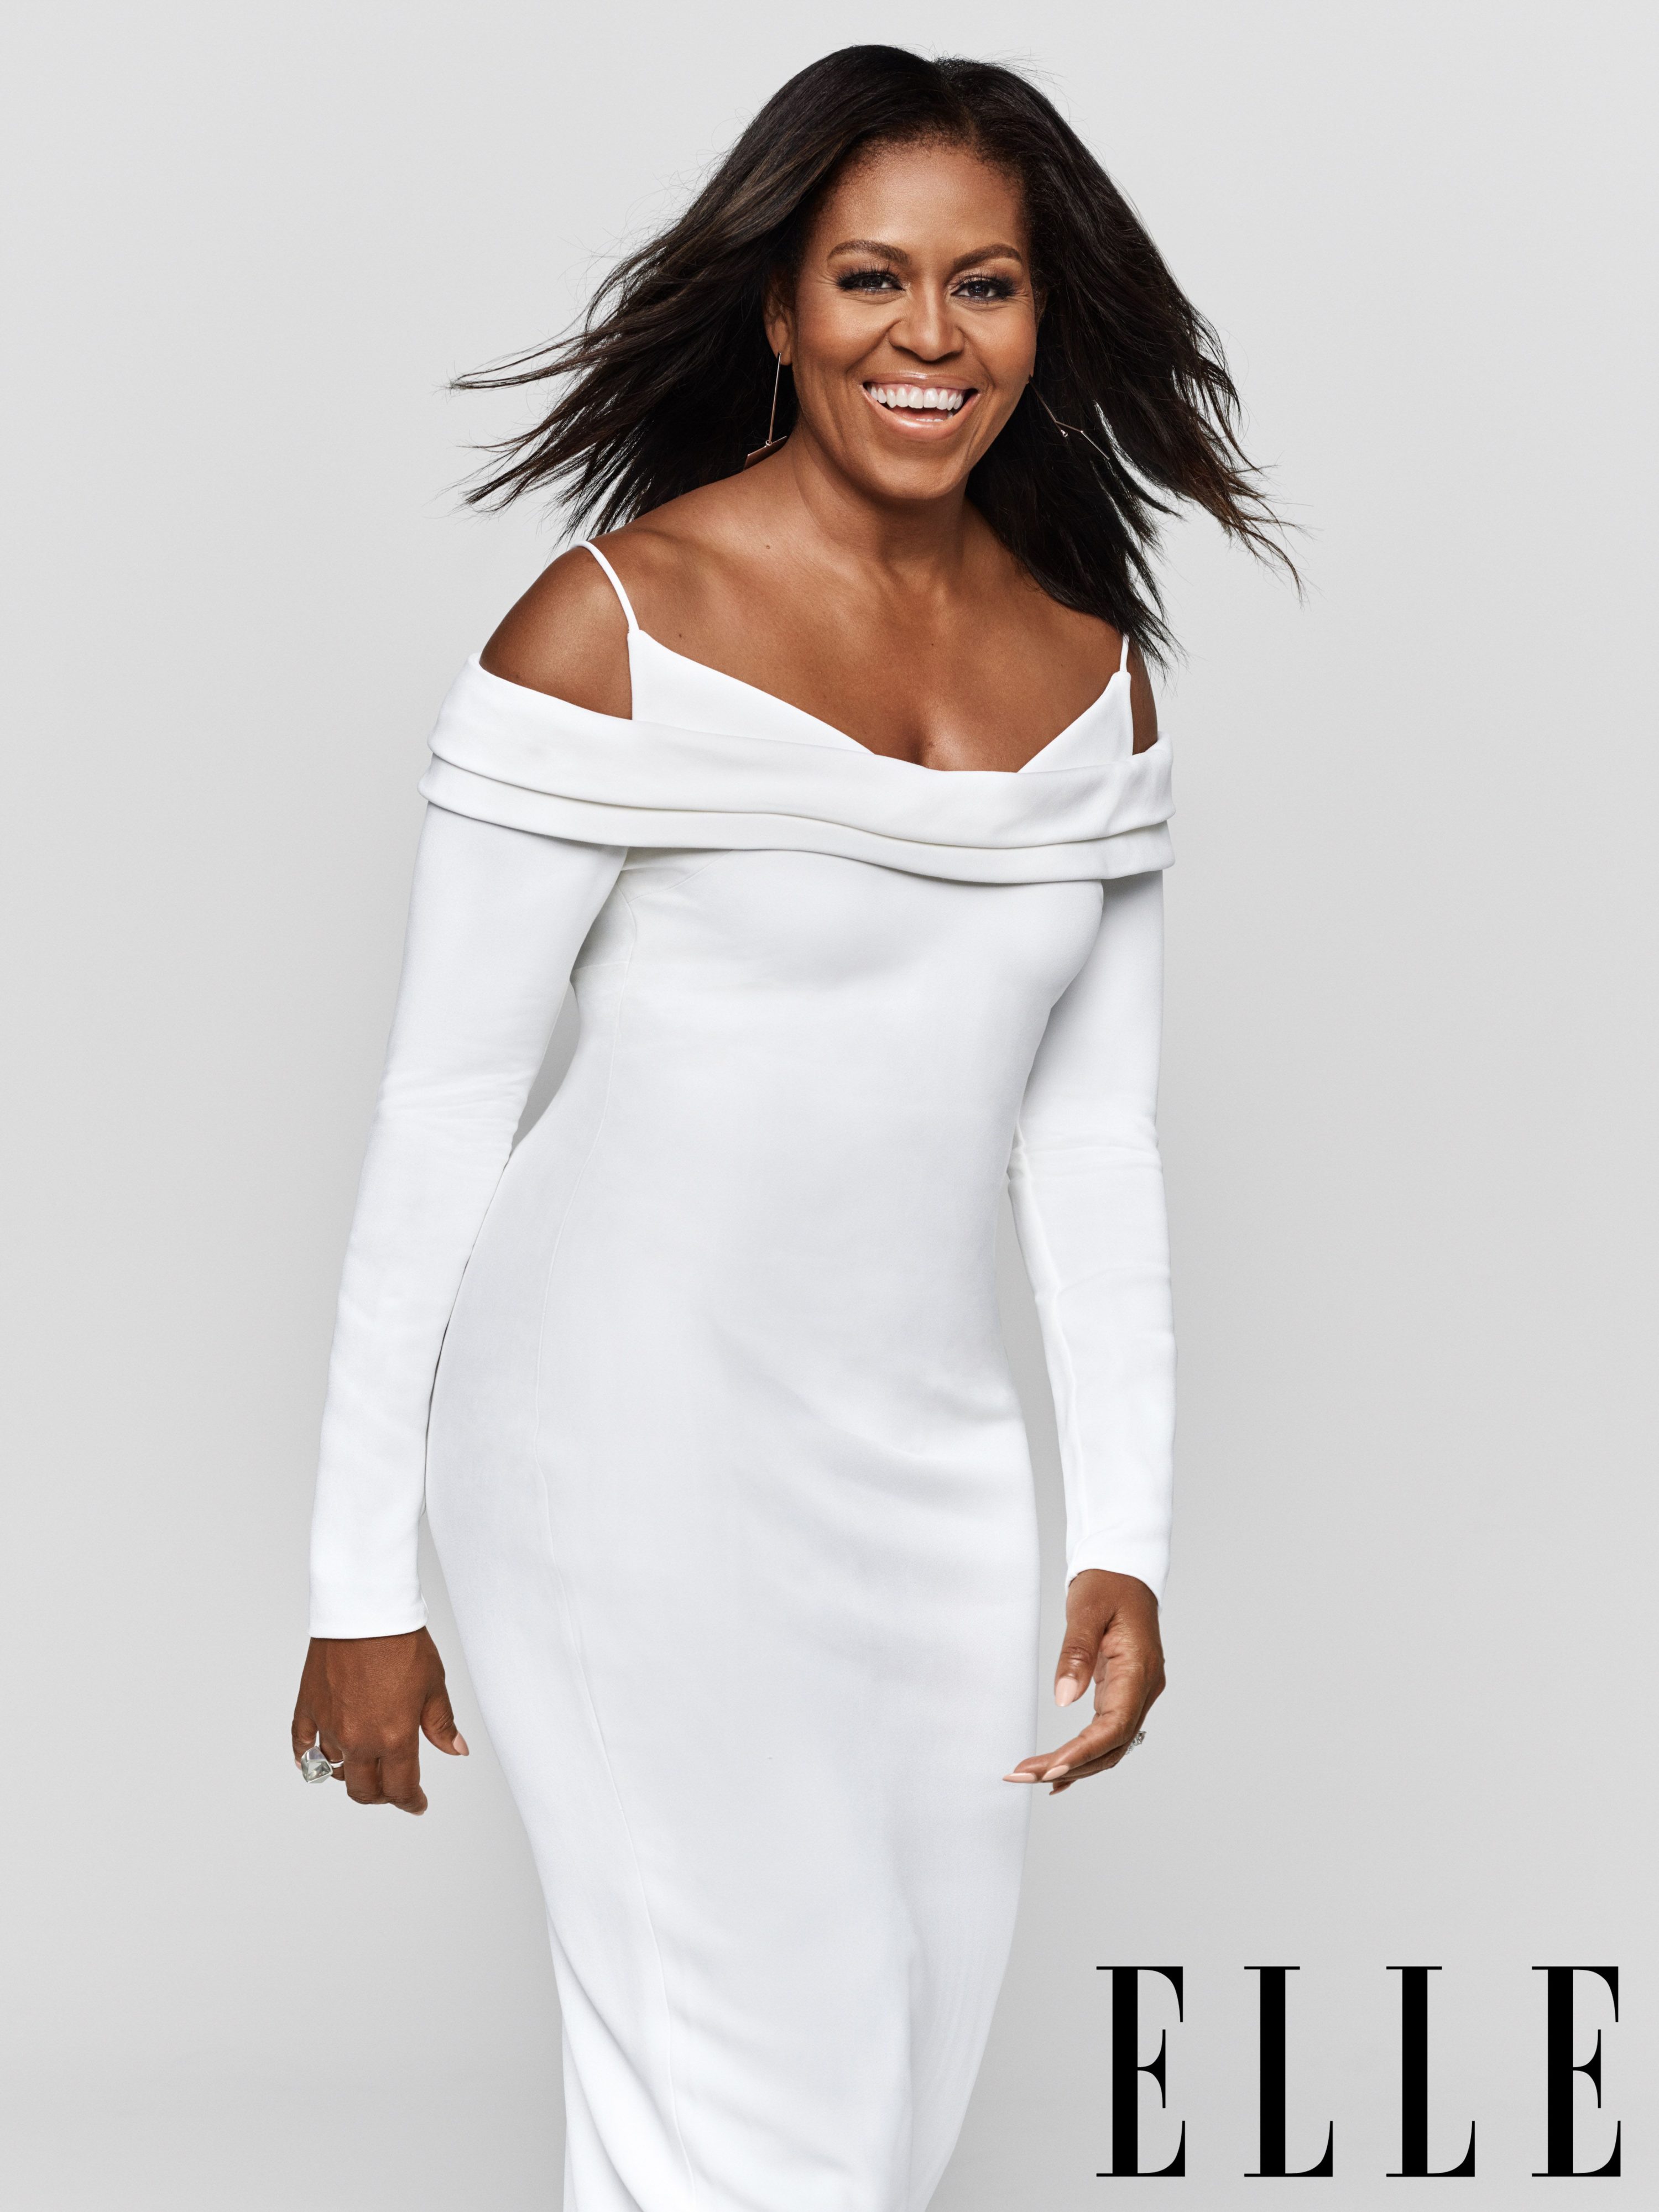 Michelle Obama - Elle US Magazine (December 2018)